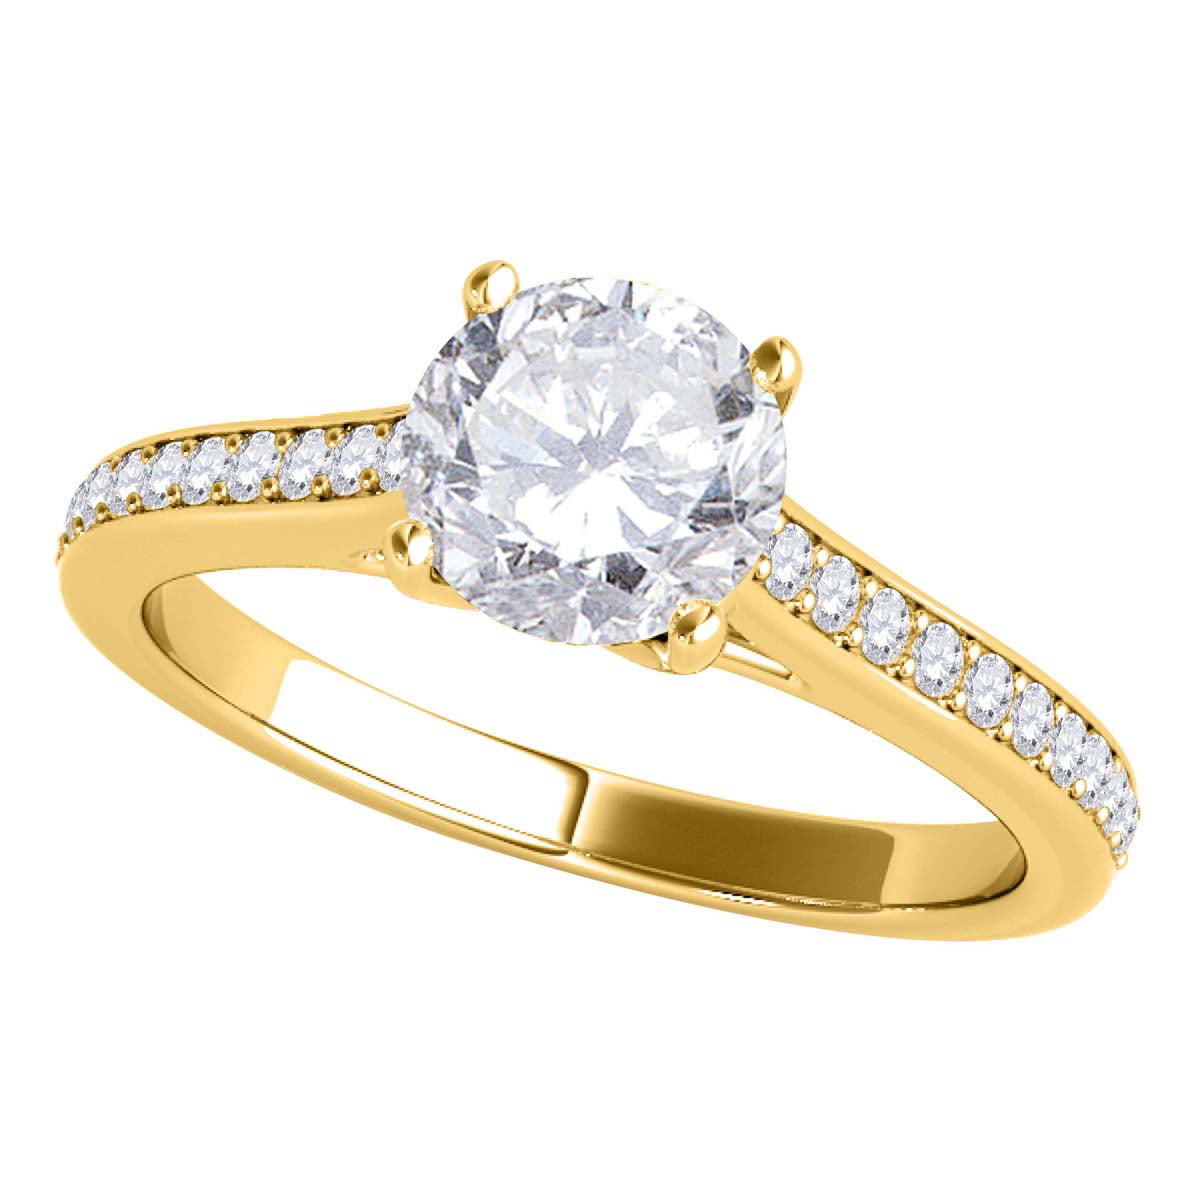 Gorgeous 14K Yellow Gold .50 Ct RB Diamond Wedding/Engagement Ring, Size 6  | eBay